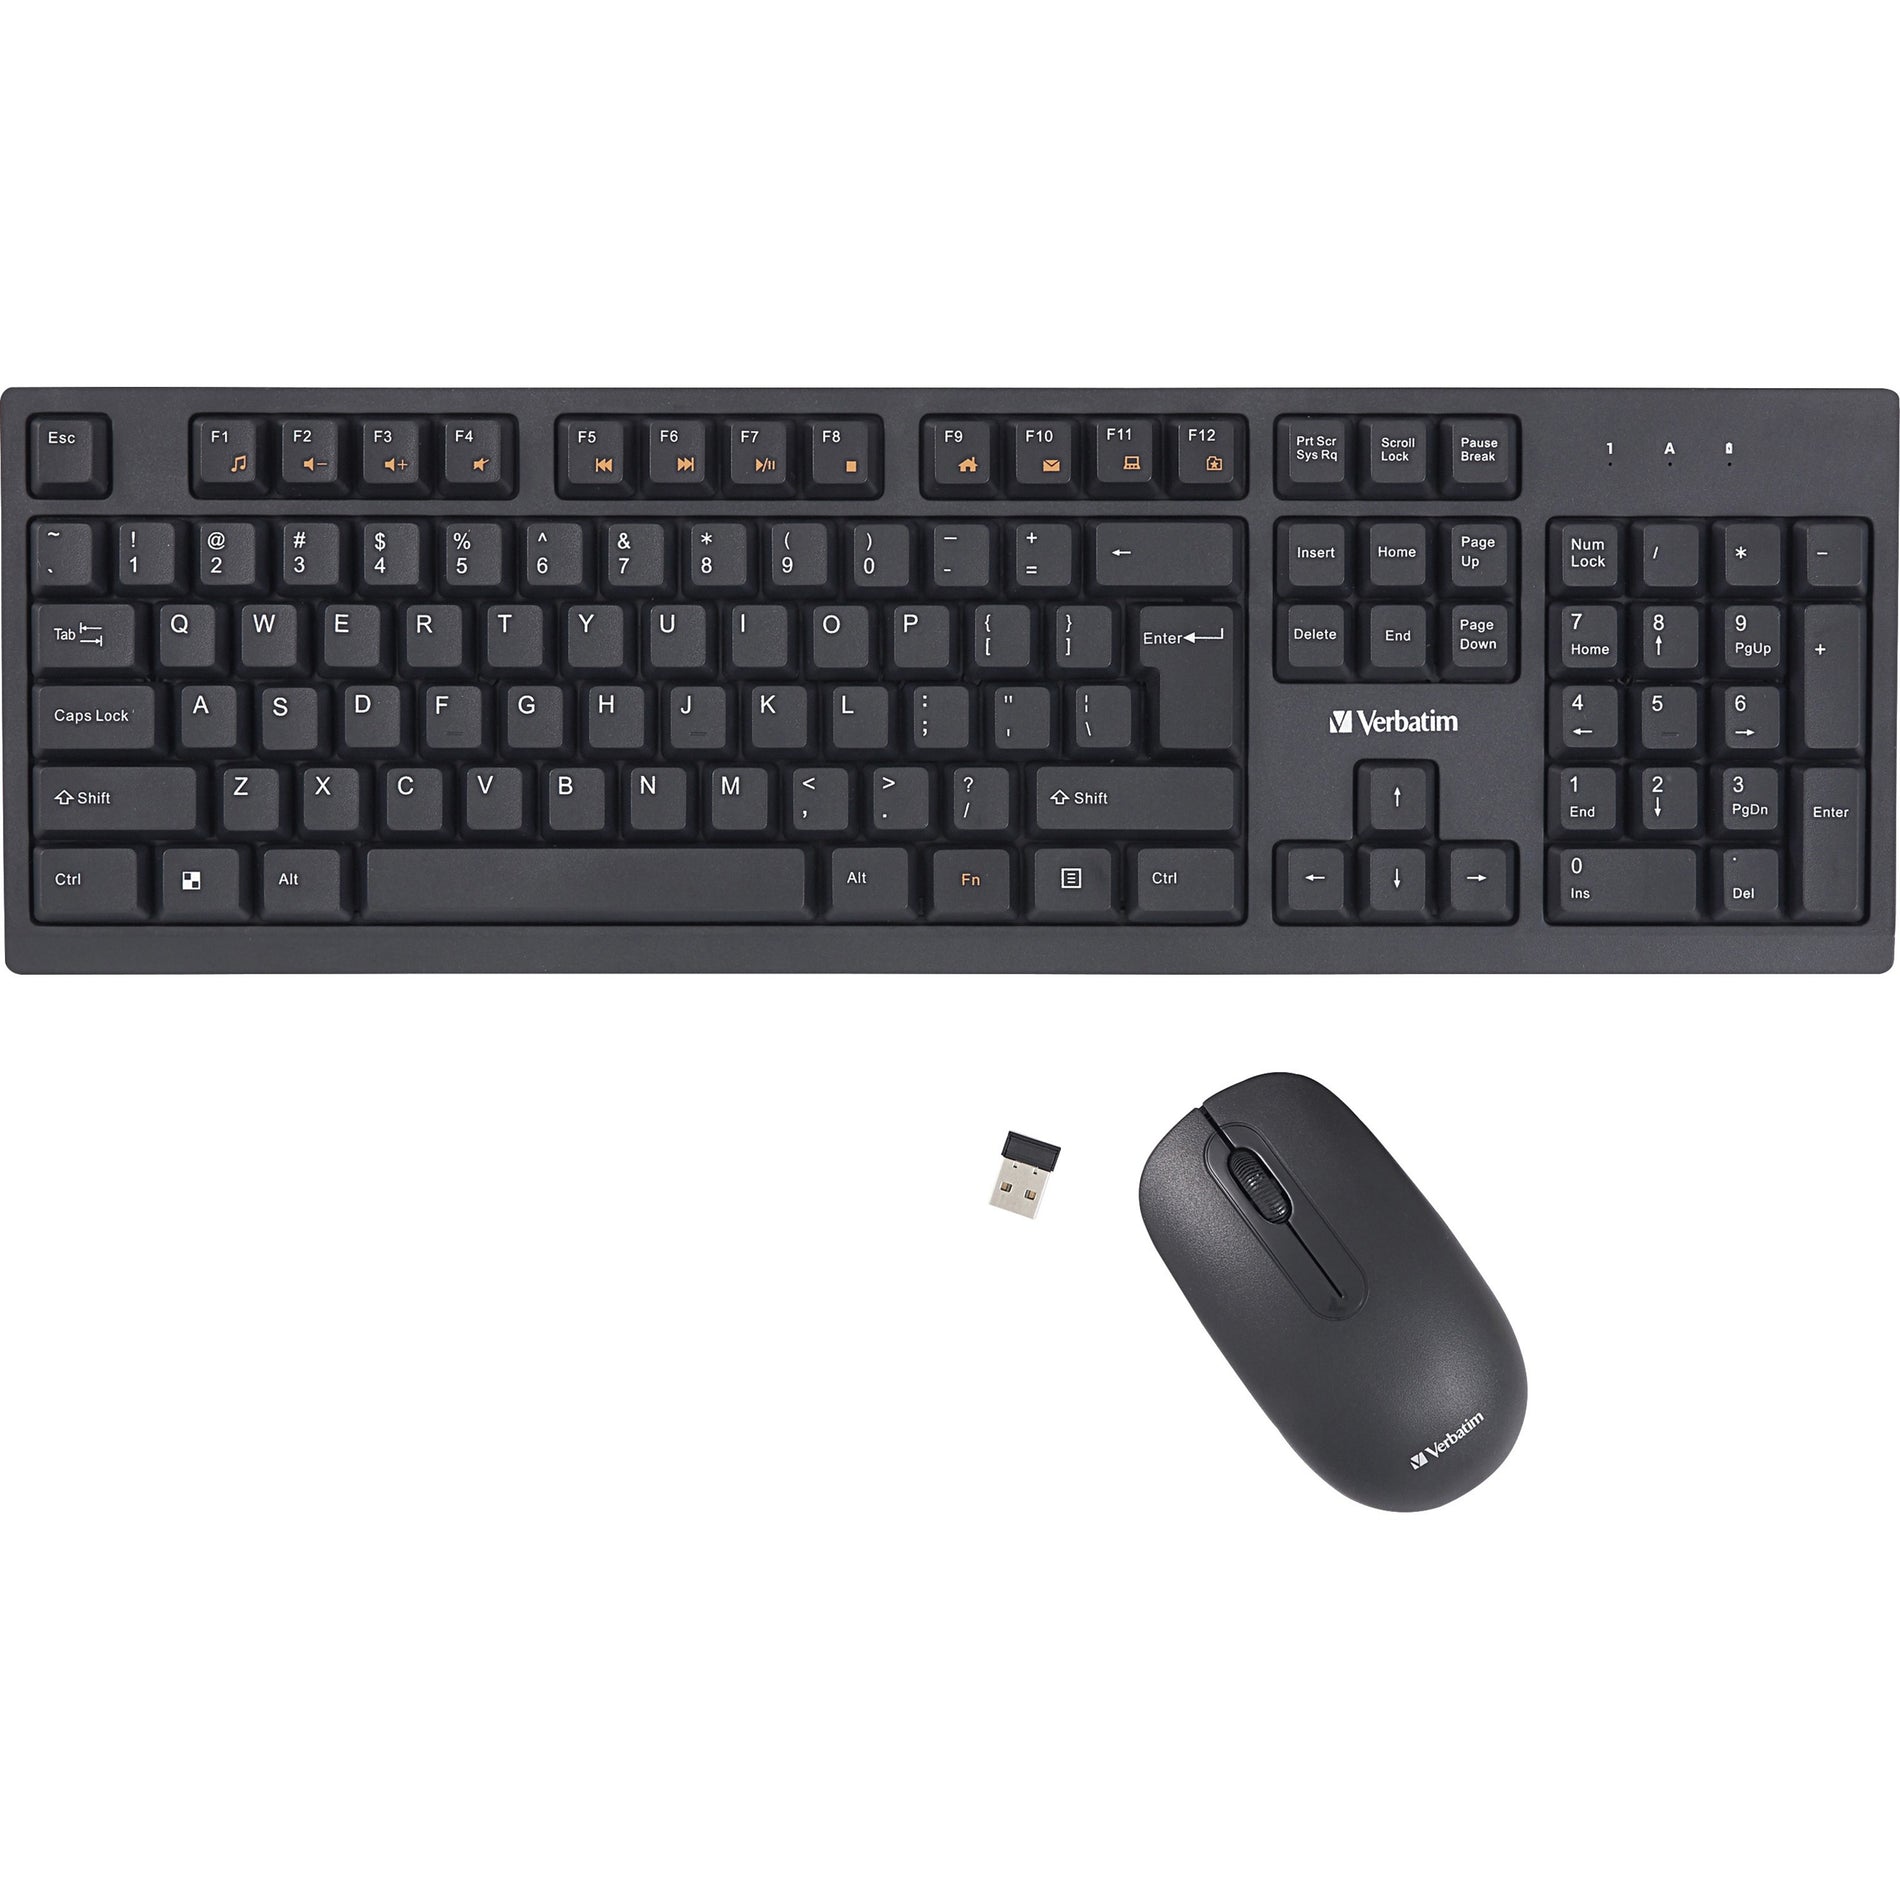 Verbatim 70724 Wireless Keyboard And Mouse, Bluetooth, Multimedia Hot Keys